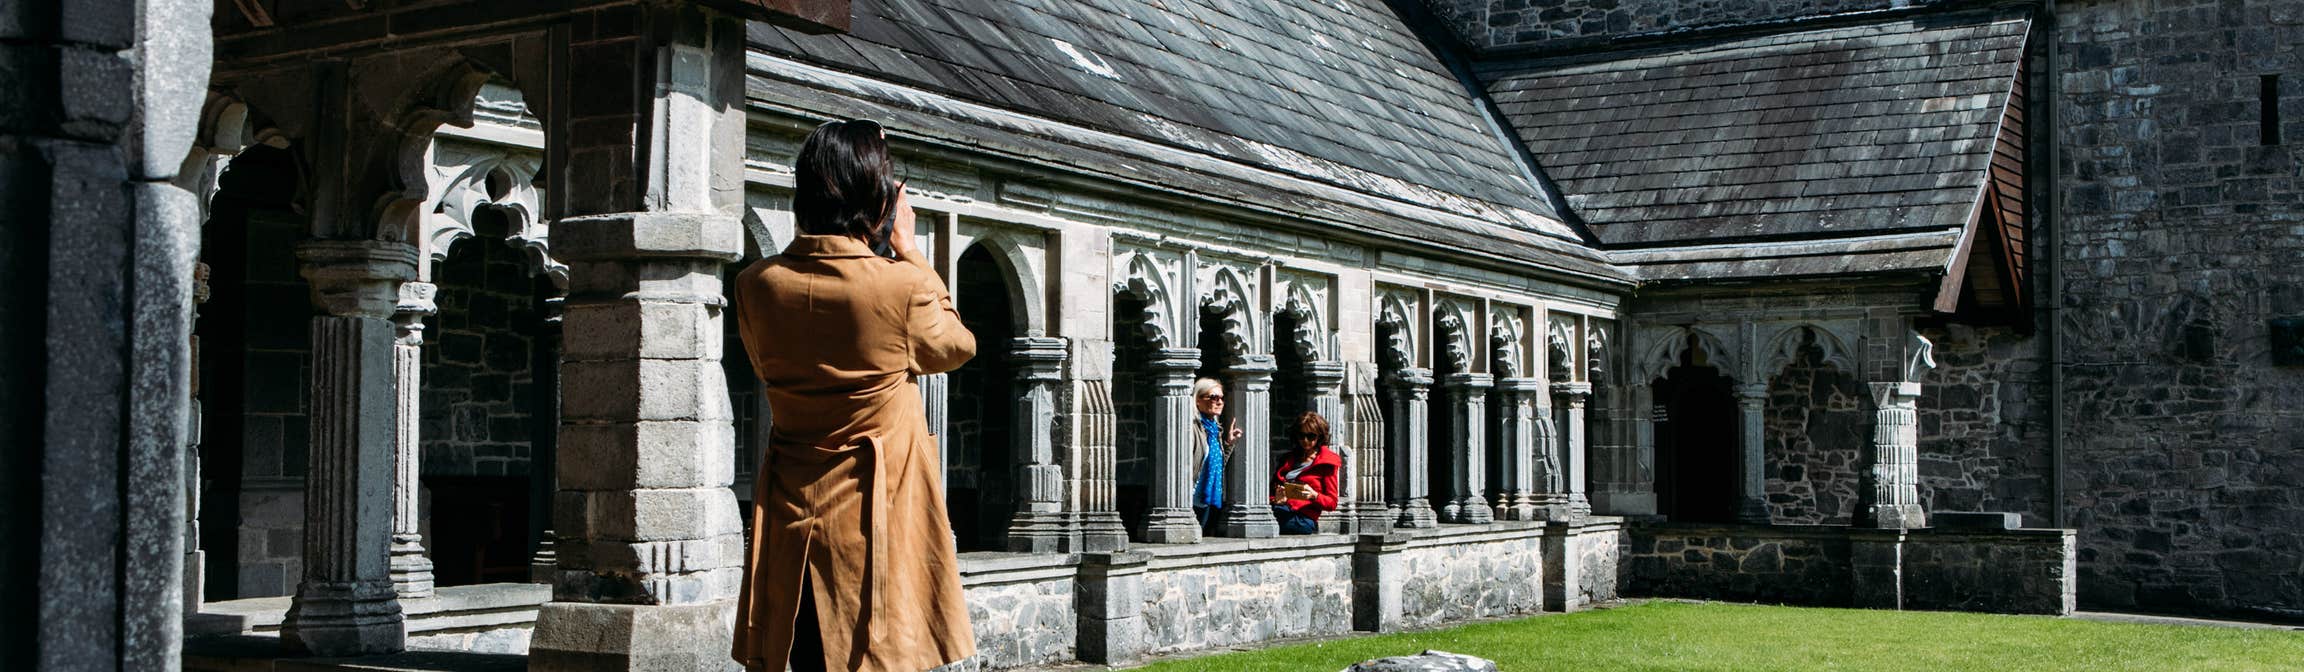 Woman taking a photo at Holycross Abbey.